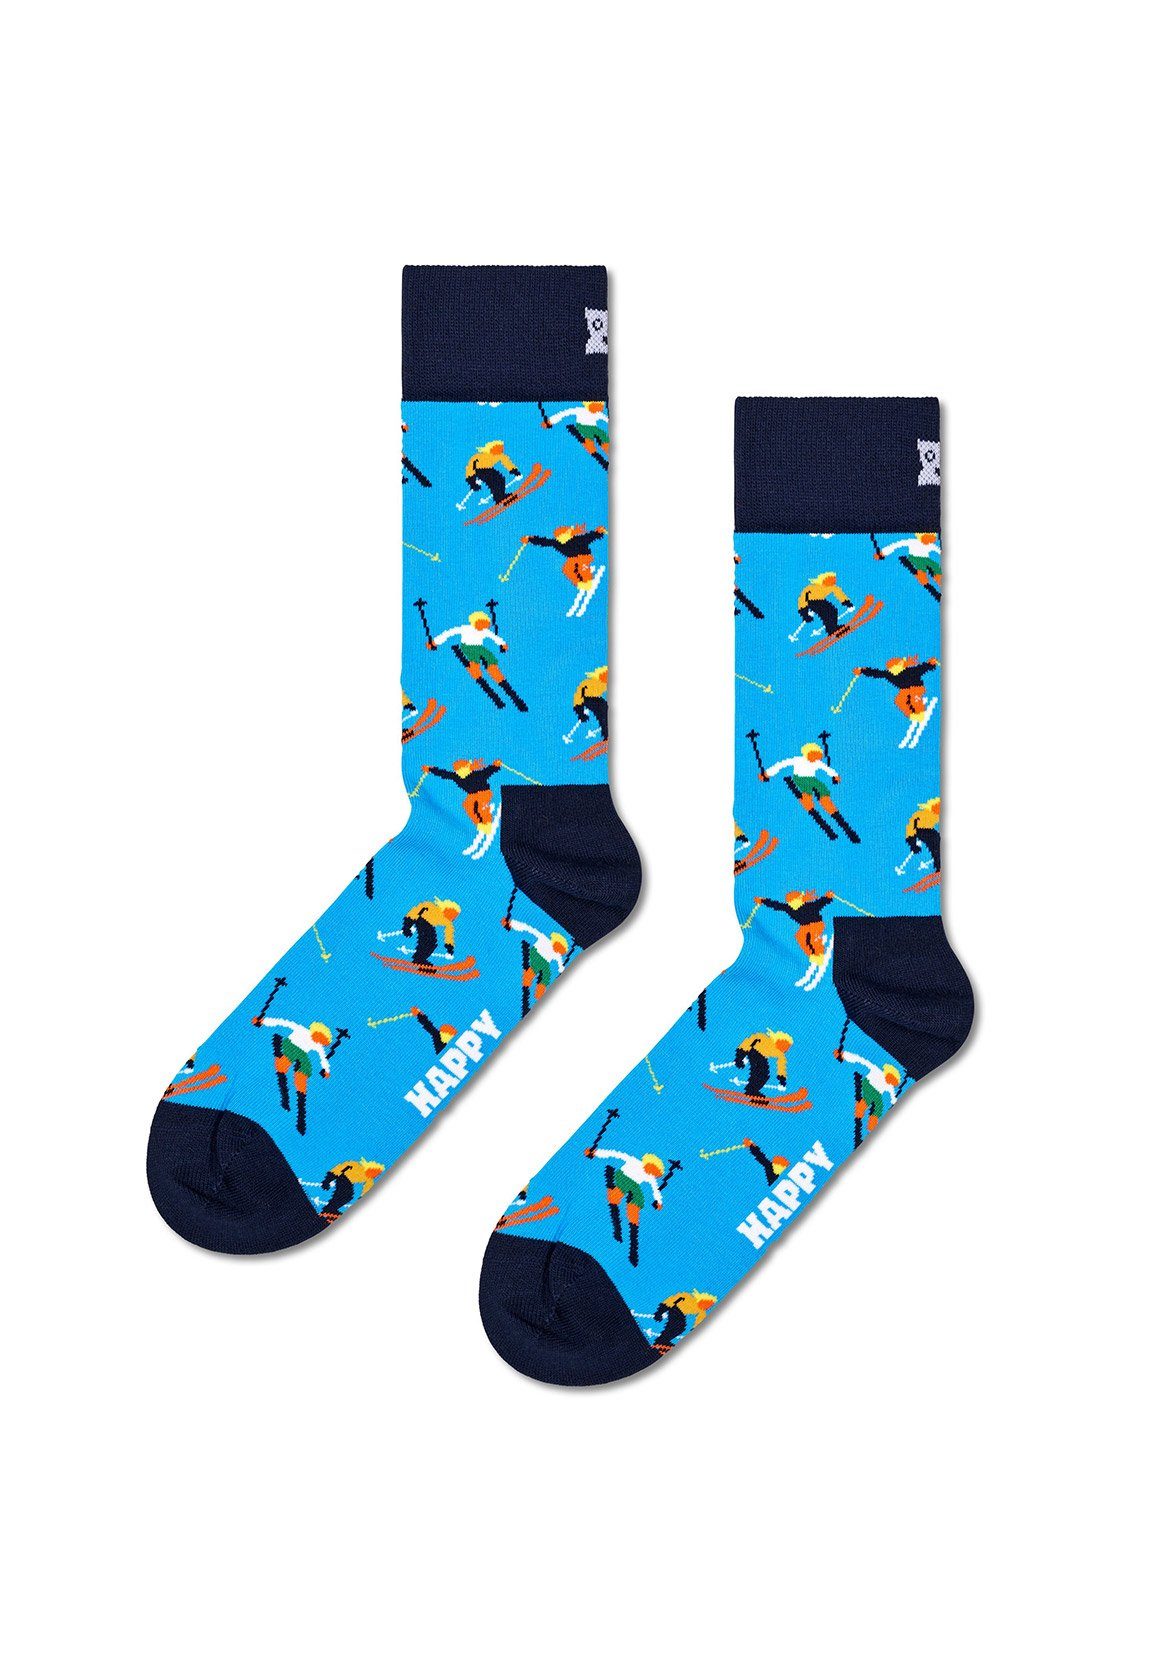 Mehrfarbig Socks SET DOWNHILL GIFT P000333 Freizeitsocken Geschenkbox Happy Happy SKIING Socks